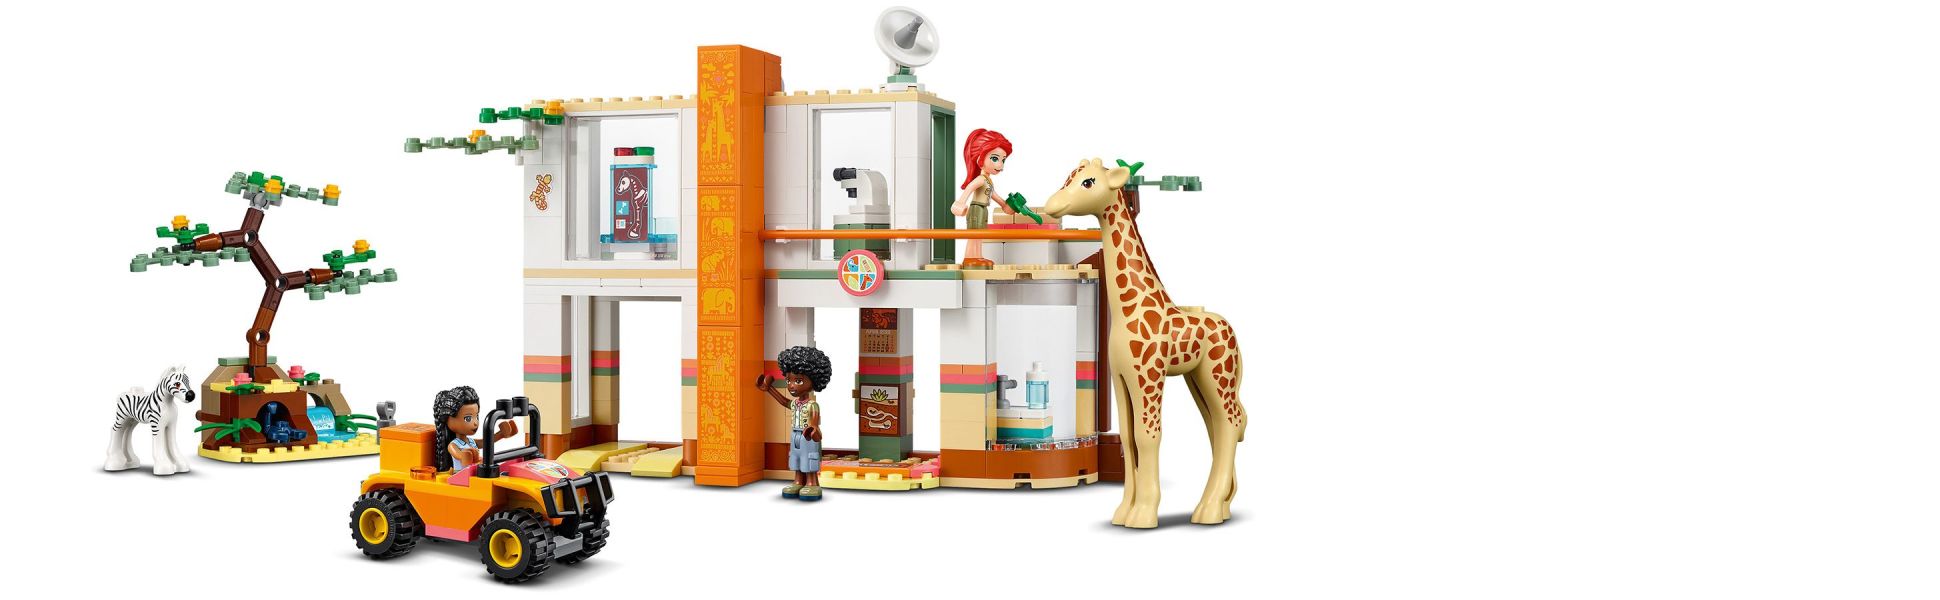 LEGO Friends Mia\'s Wildlife Rescue Toy 41717 with Zebra and Giraffe Safari  Animal Figures plus 3 Mini Dolls, Birthday Gift Idea for Kids, Girls & Boys  Age 7 Plus Years Old